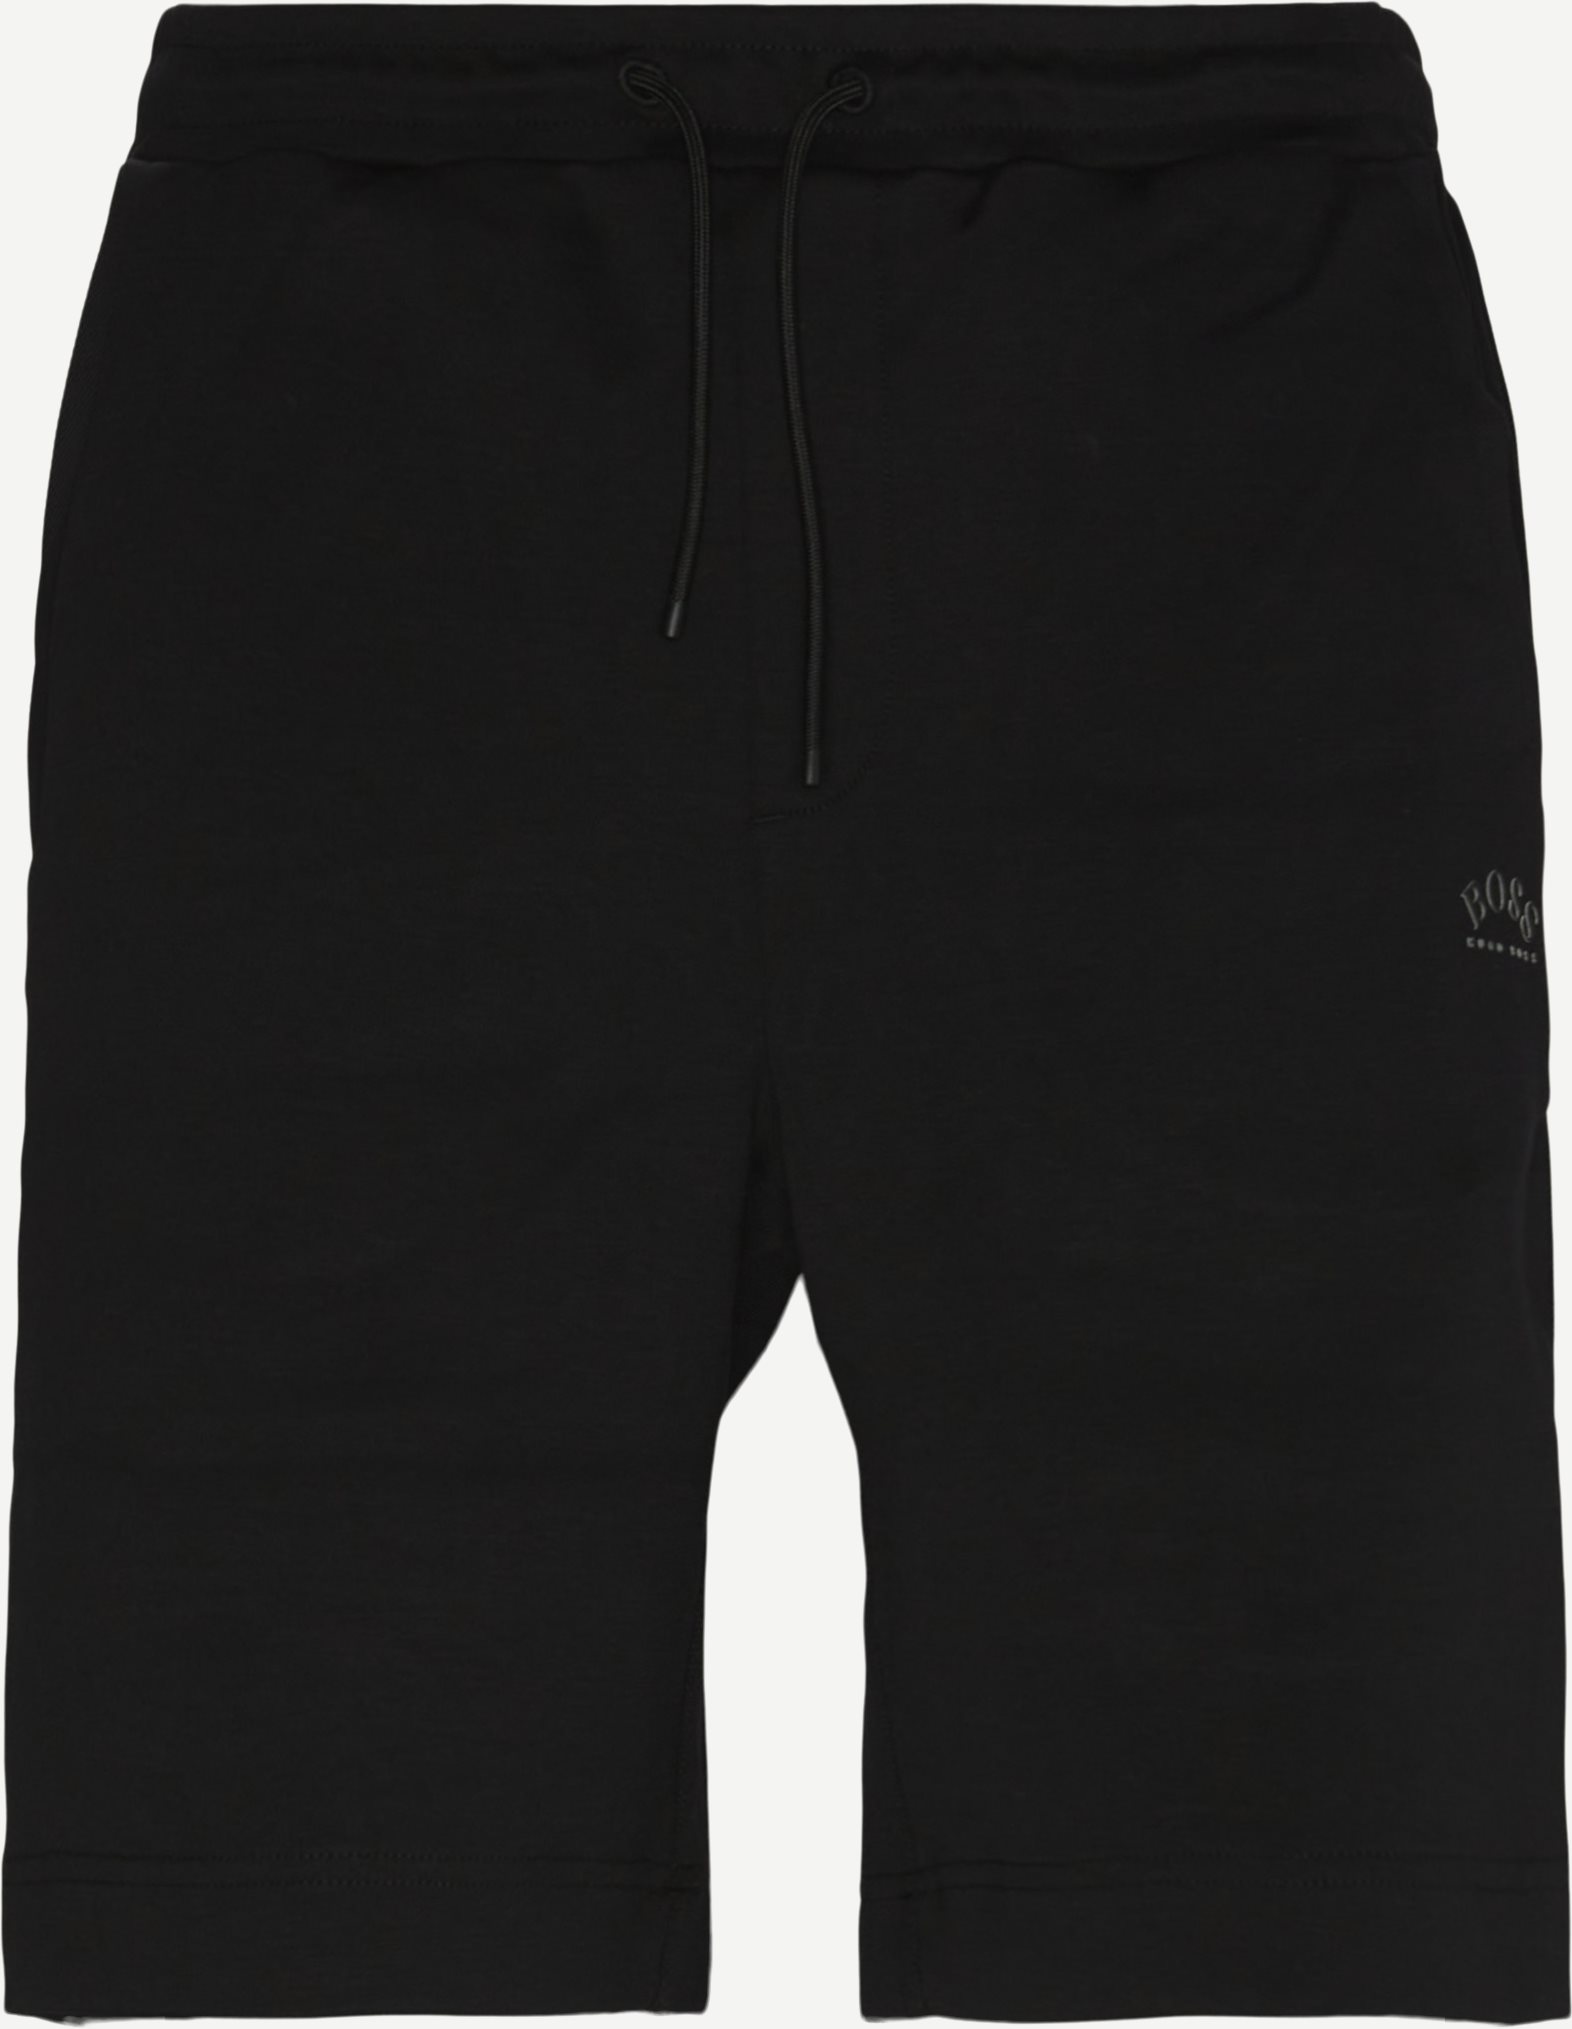 Headlo 2 Sweatshorts - Shorts - Regular fit - Black